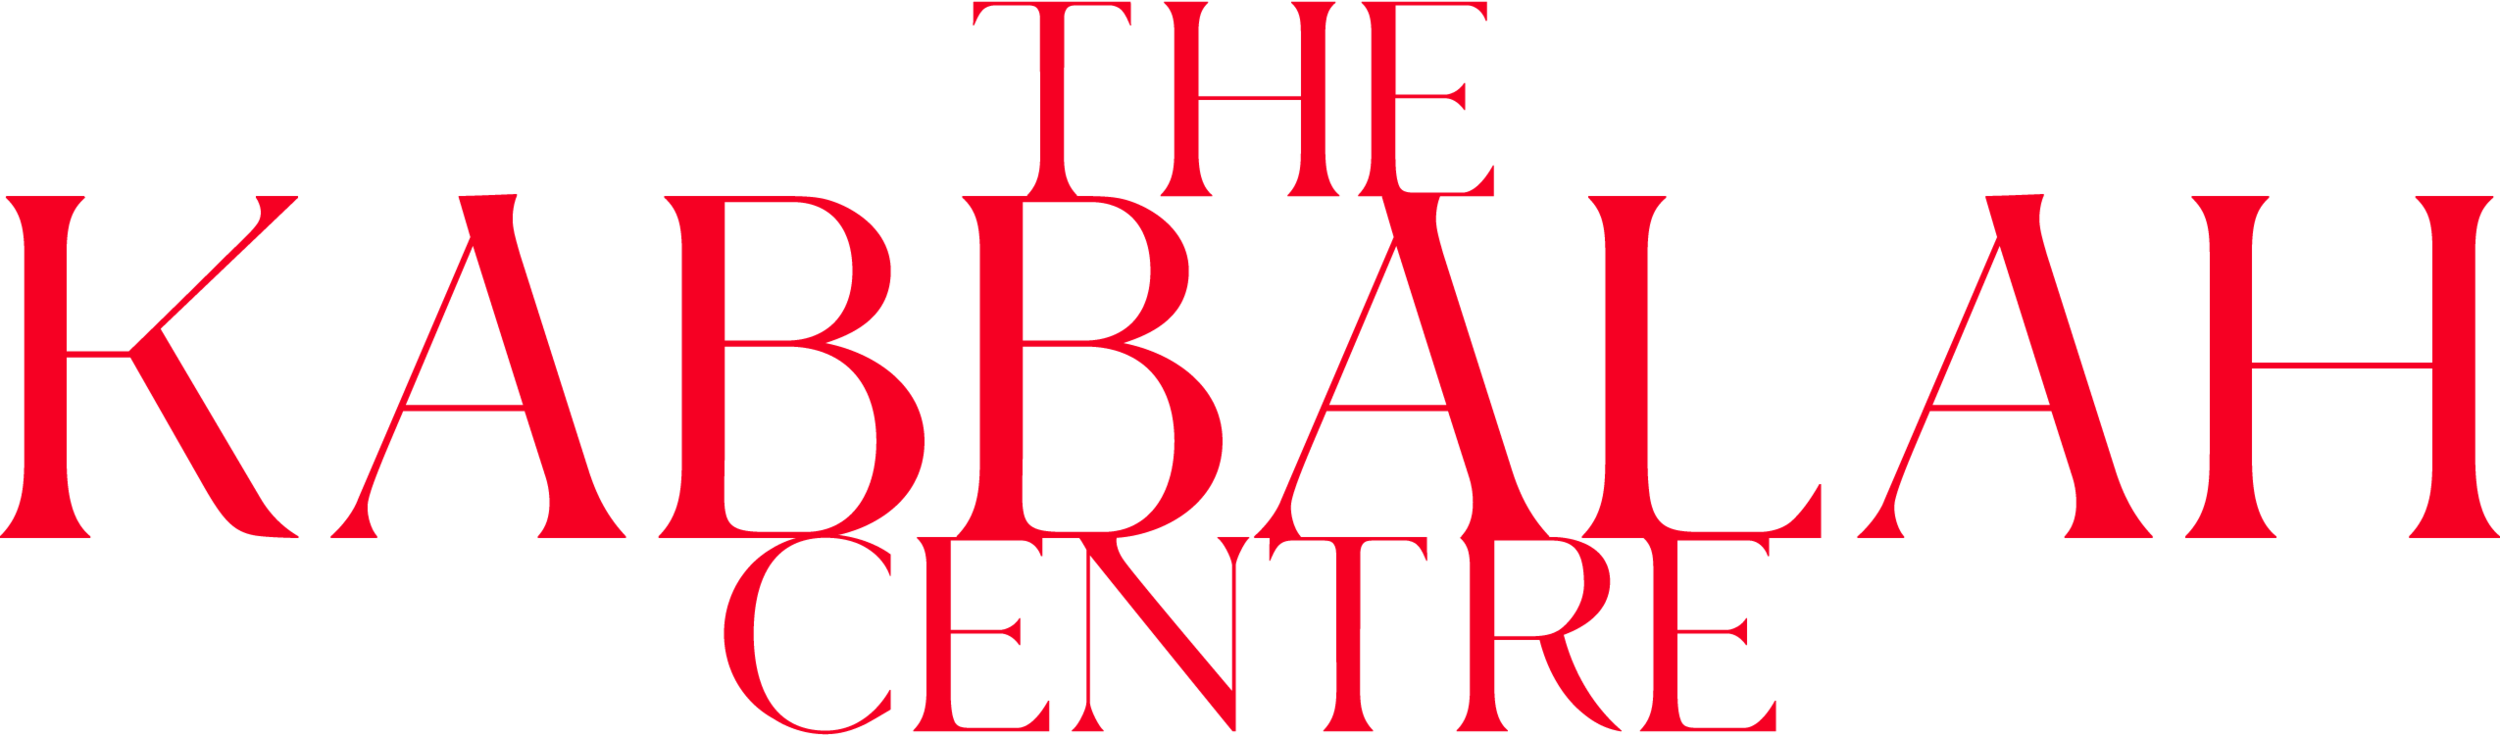 kabbalah_logo.png